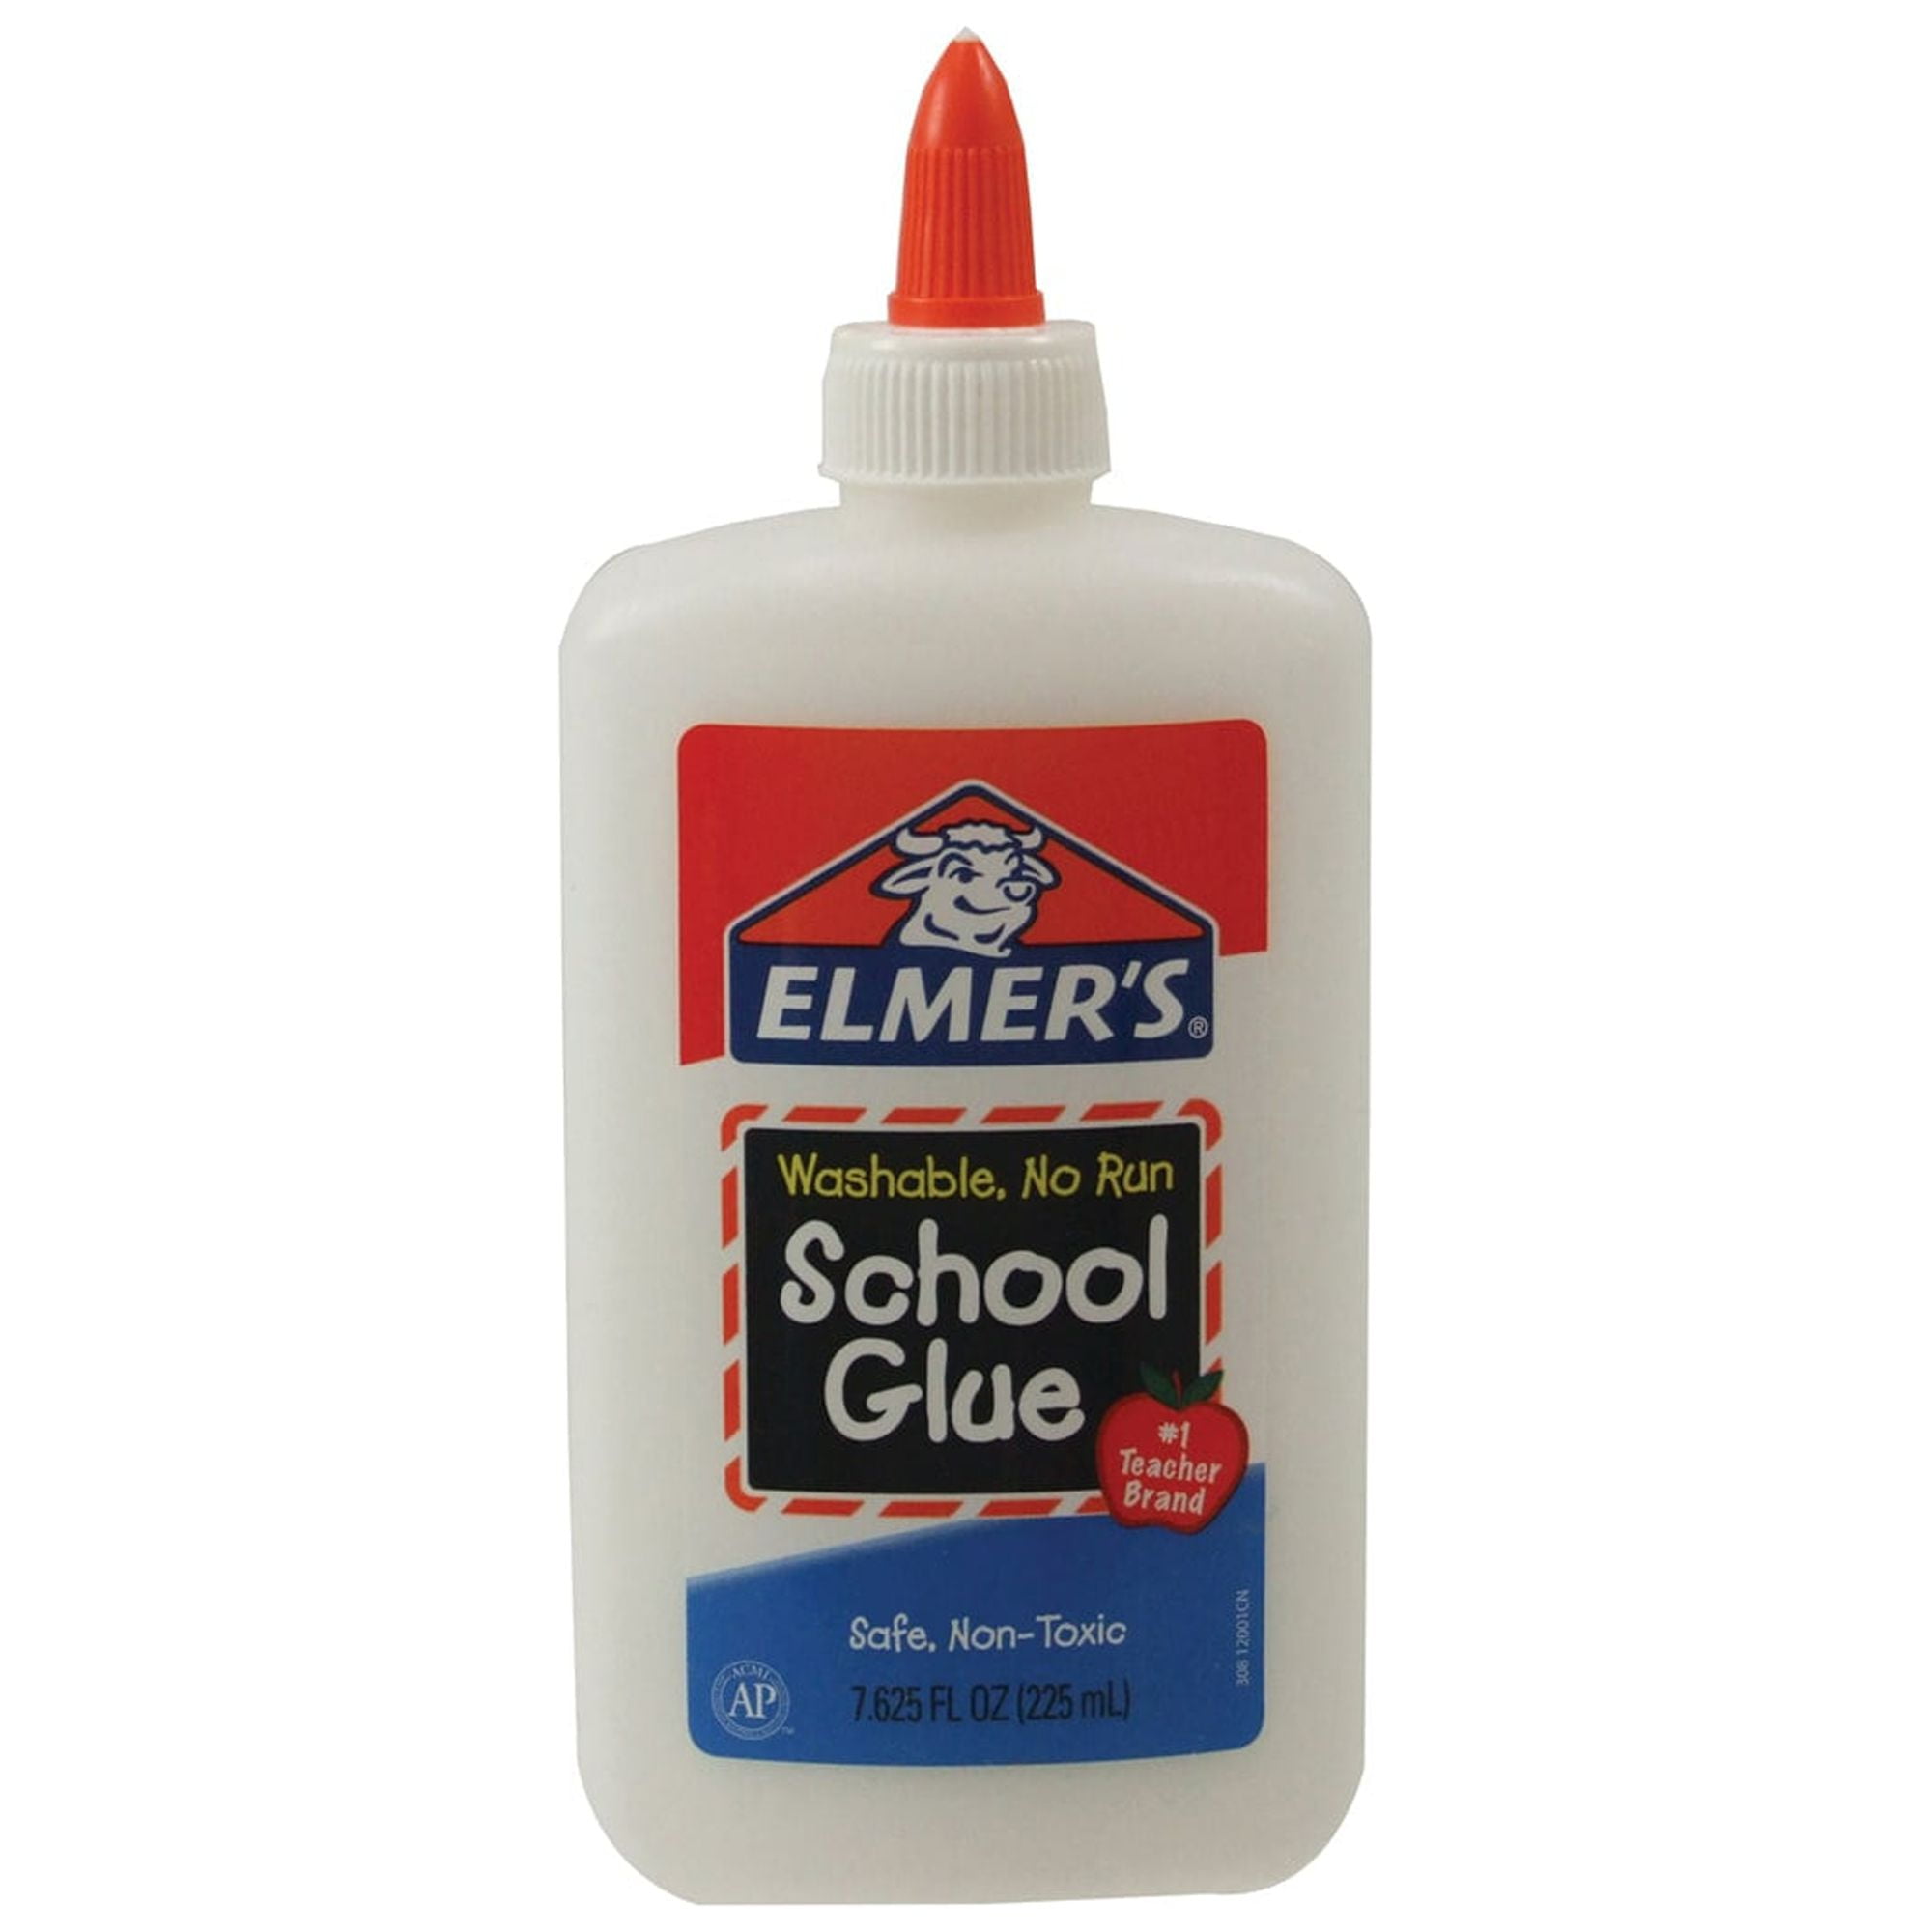 Elmer's Liquid School Glue, Clear, Washable, 9 Ounces, 3 Count